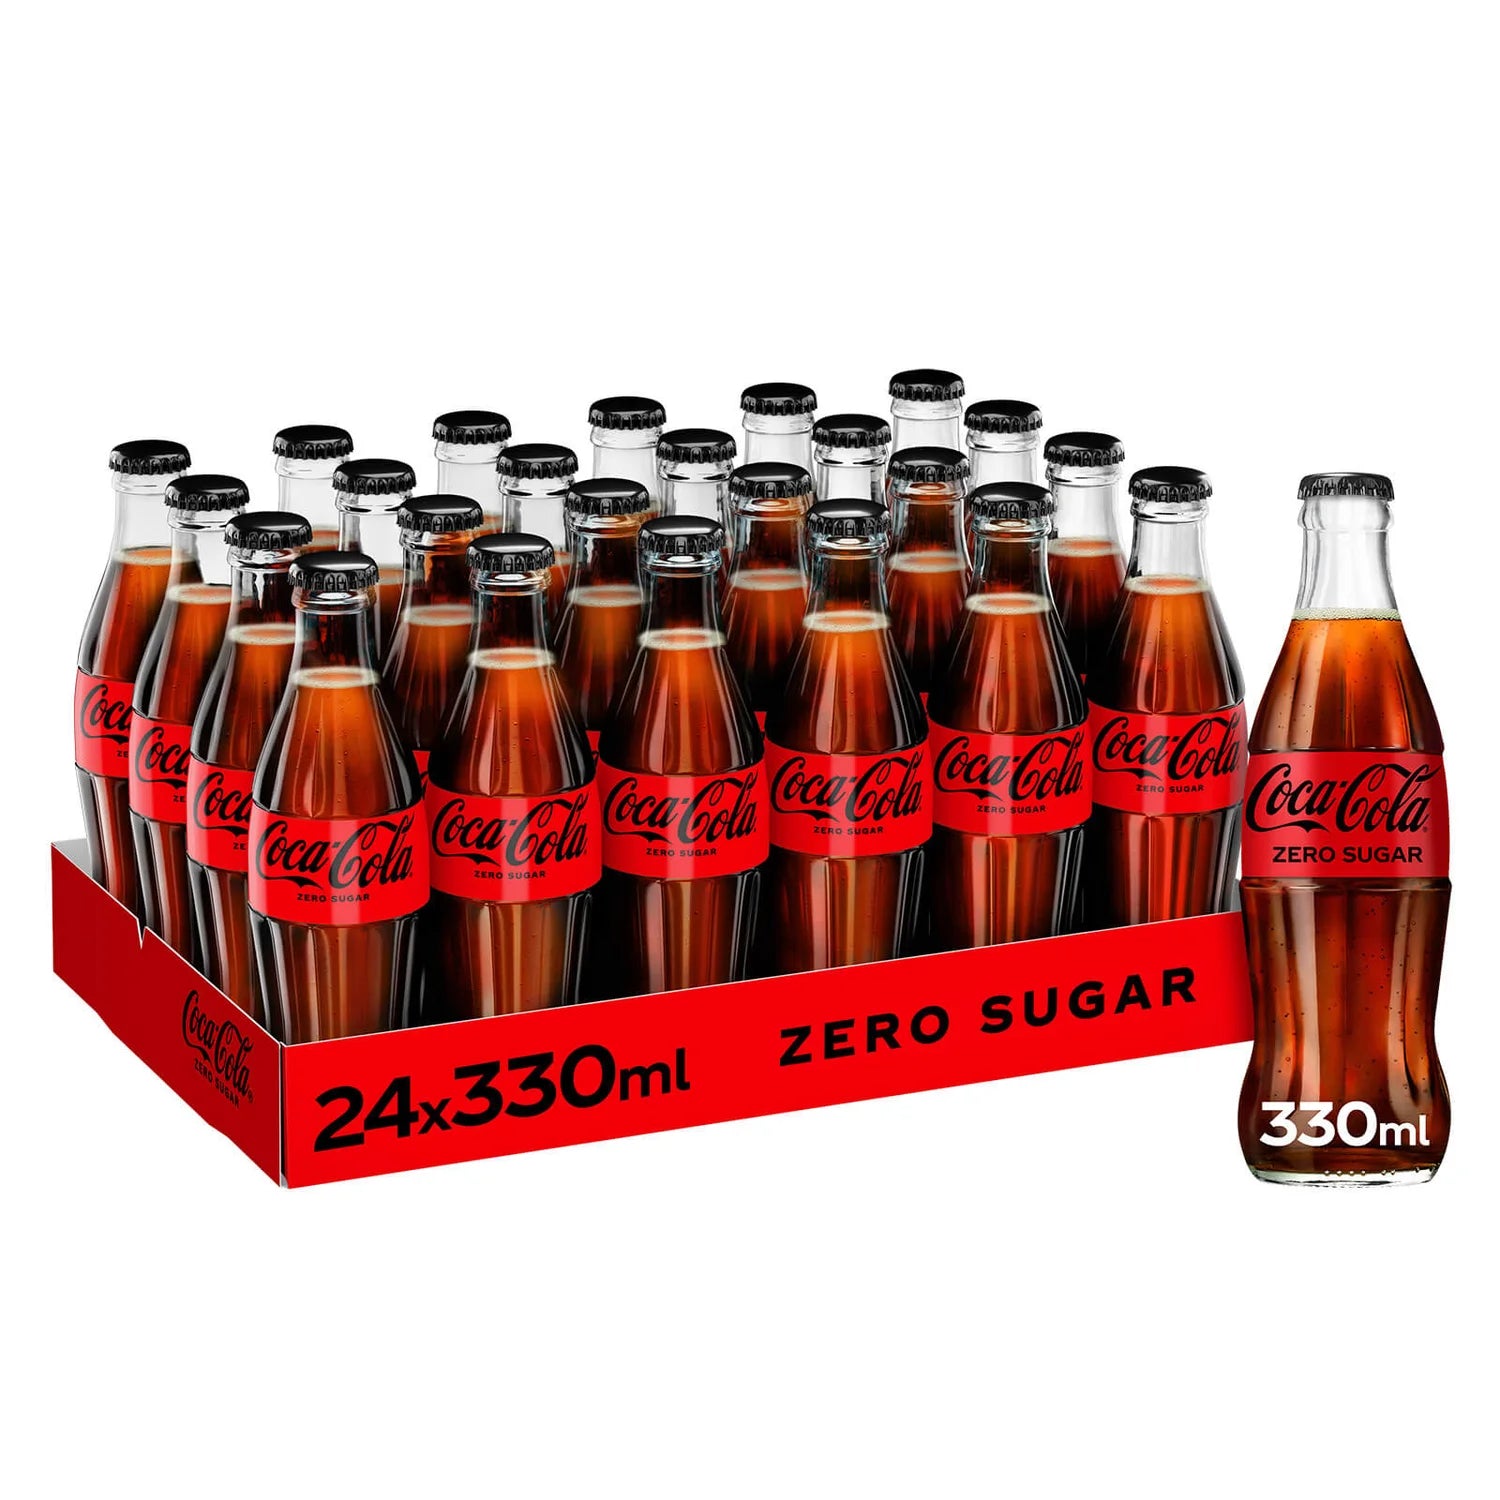 Coca-Cola Zero Sugar Glass Bottles - 330ml - Case of 24